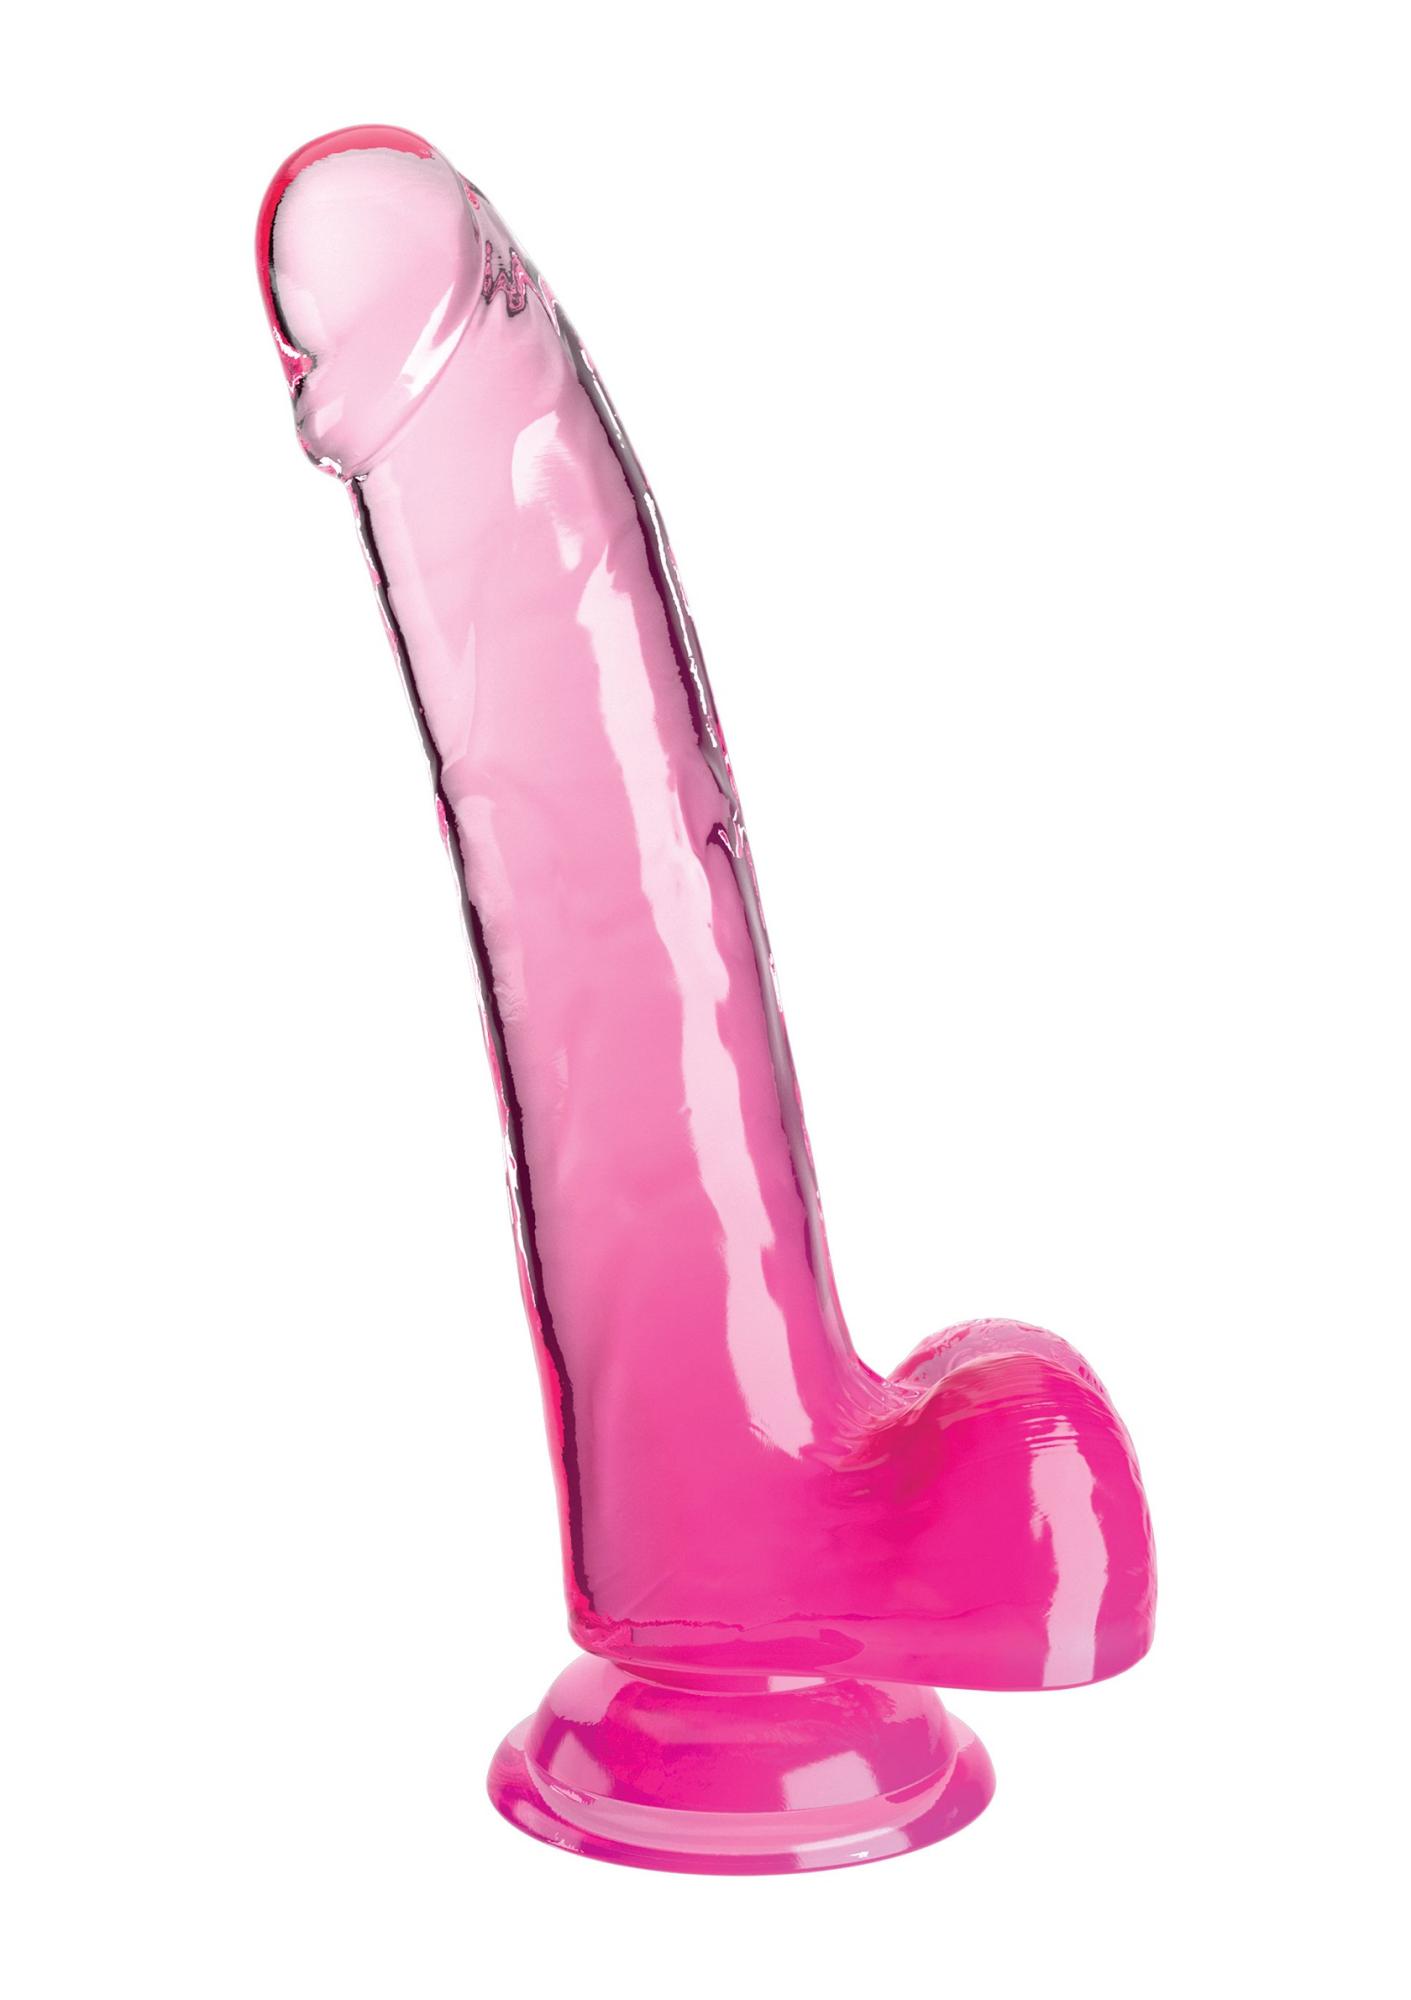 PipeDream King Cock Clear 9 - Прозрачный фаллоимитатор с мошонкой на присоске, 24.8х4.5 см (розовый)